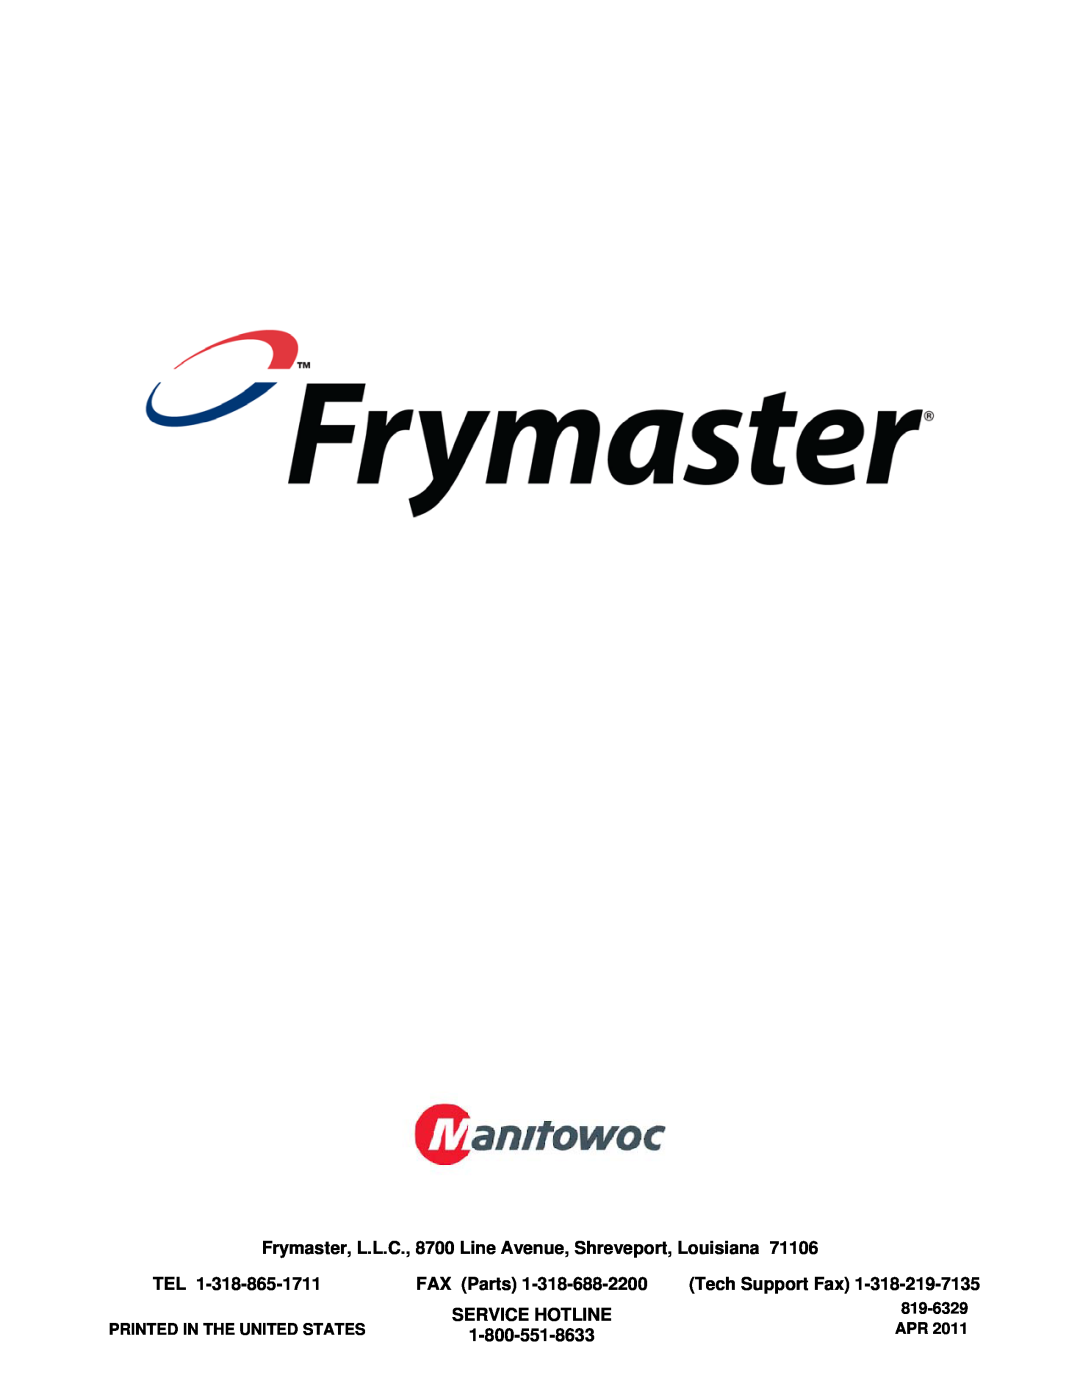 Frymaster Y/KSCF/C/HC18G Frymaster, L.L.C., 8700 Line Avenue, Shreveport, Louisiana, FAX Parts, Tech Support Fax, 819-6329 